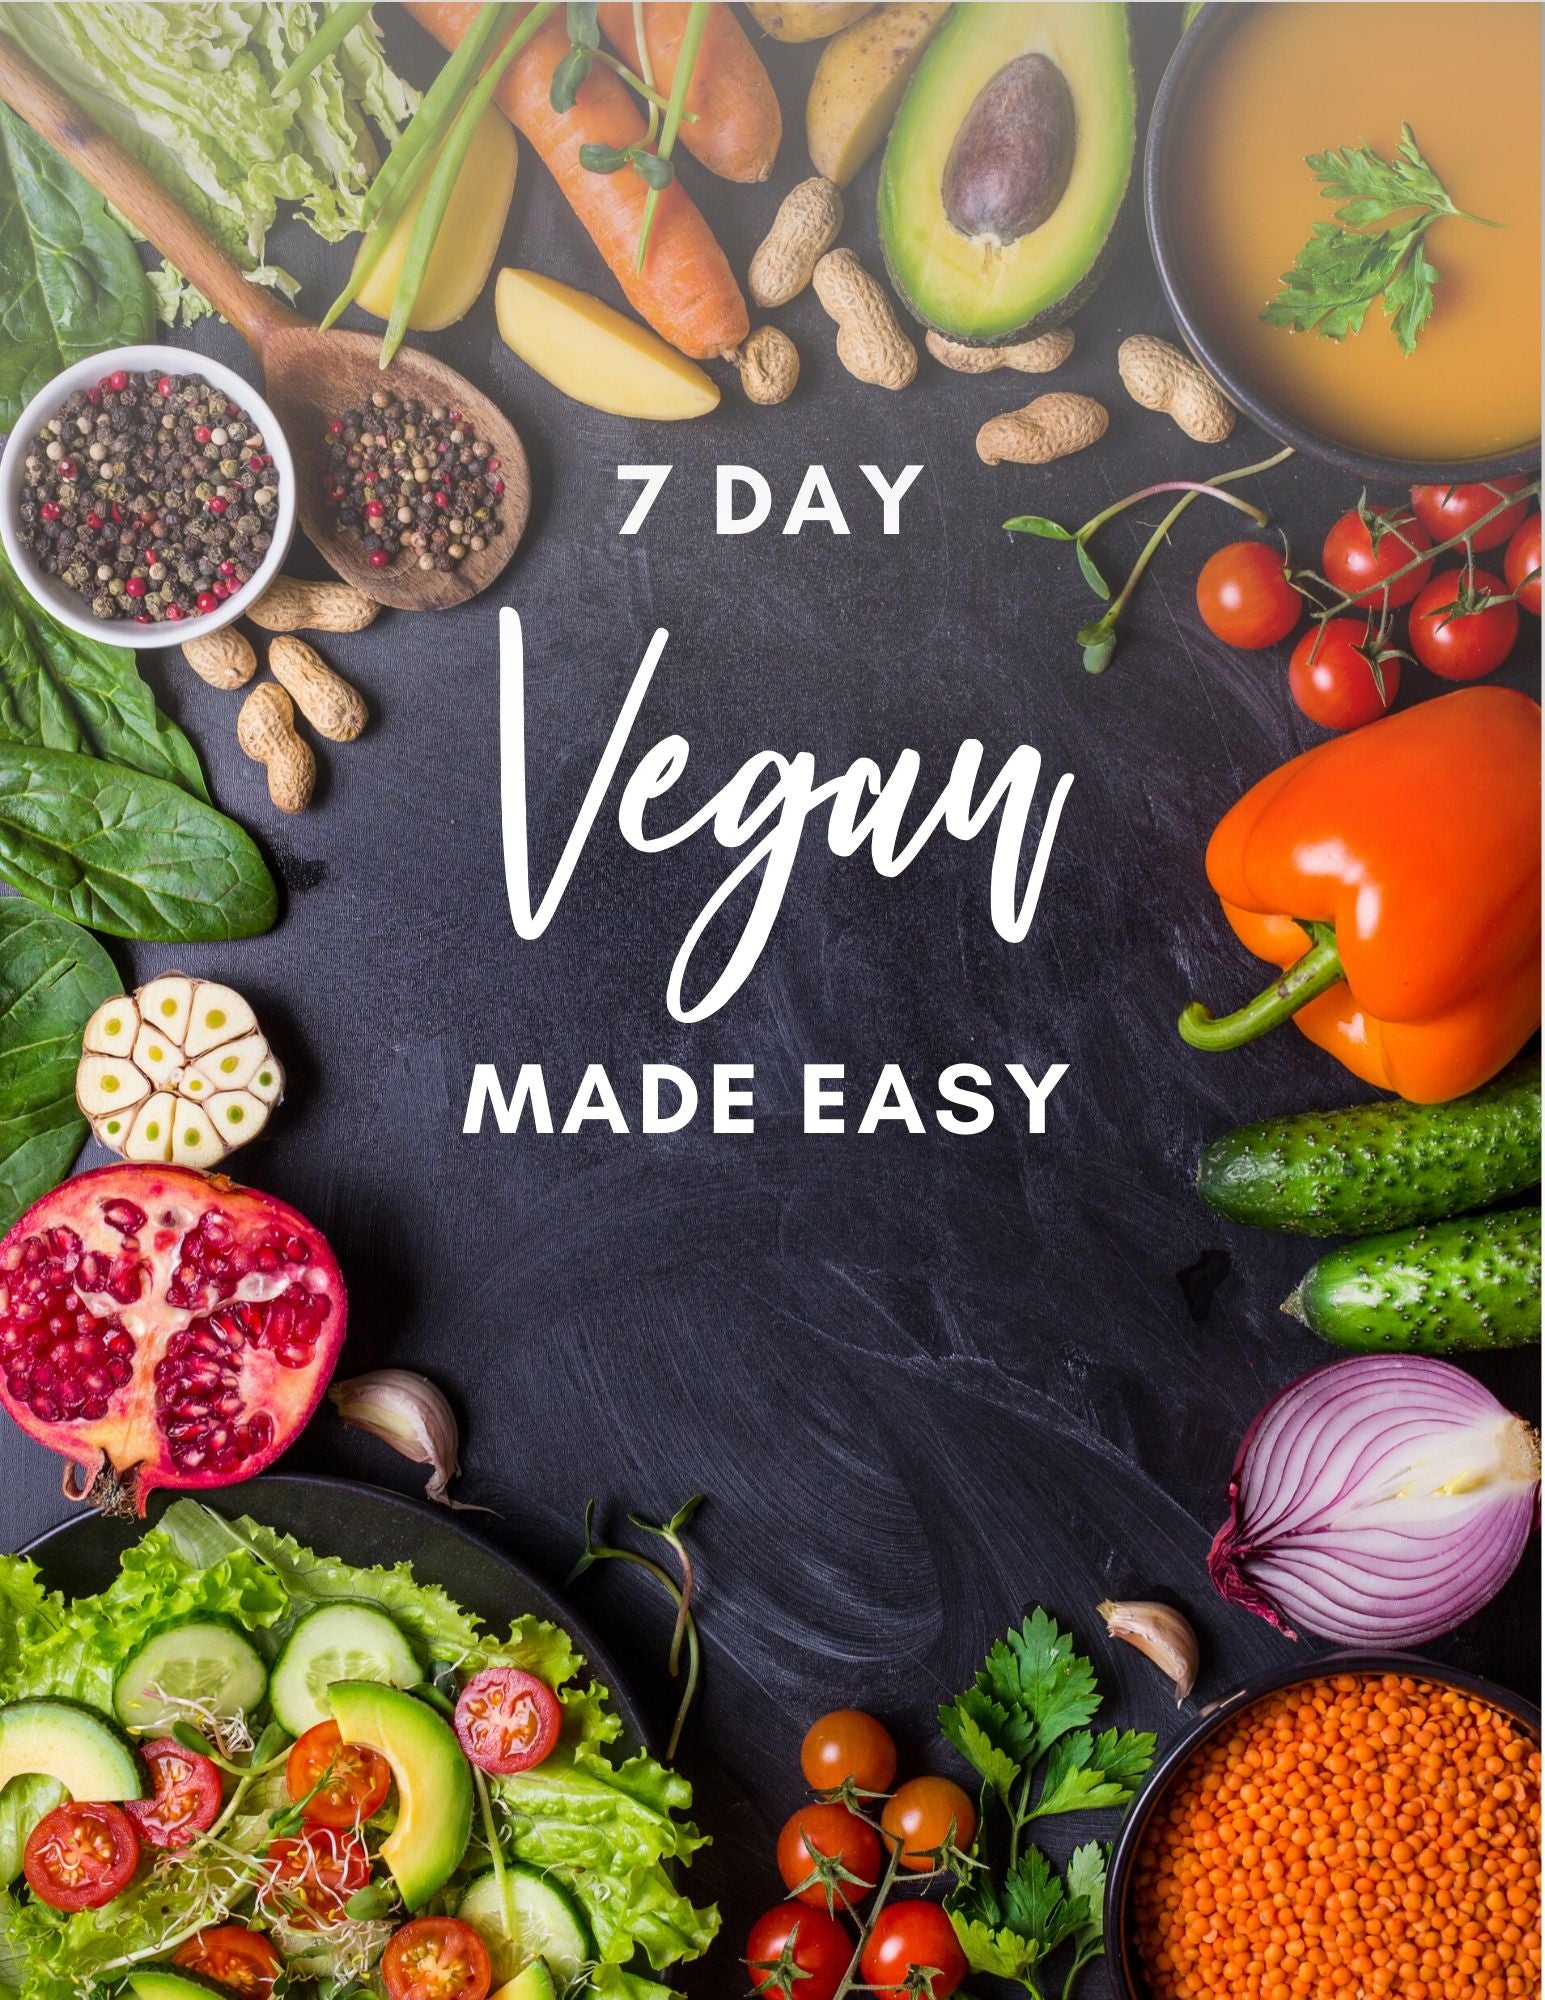 Lover's 7 Day Vegan Made Easy Recipe eBook!